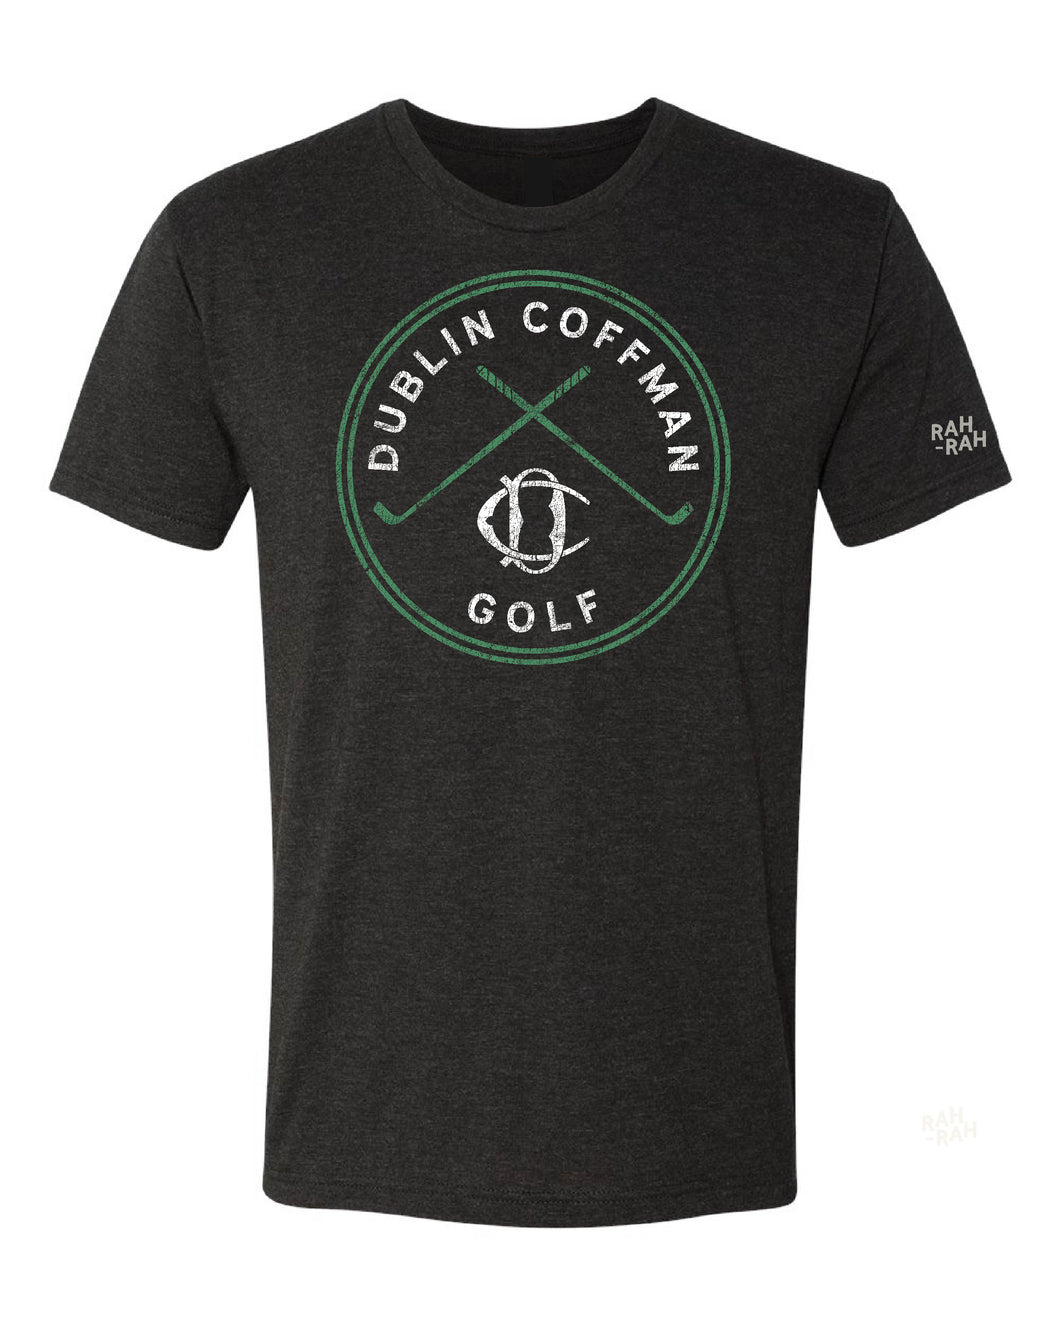 Coffman Golf Signature Black Tee